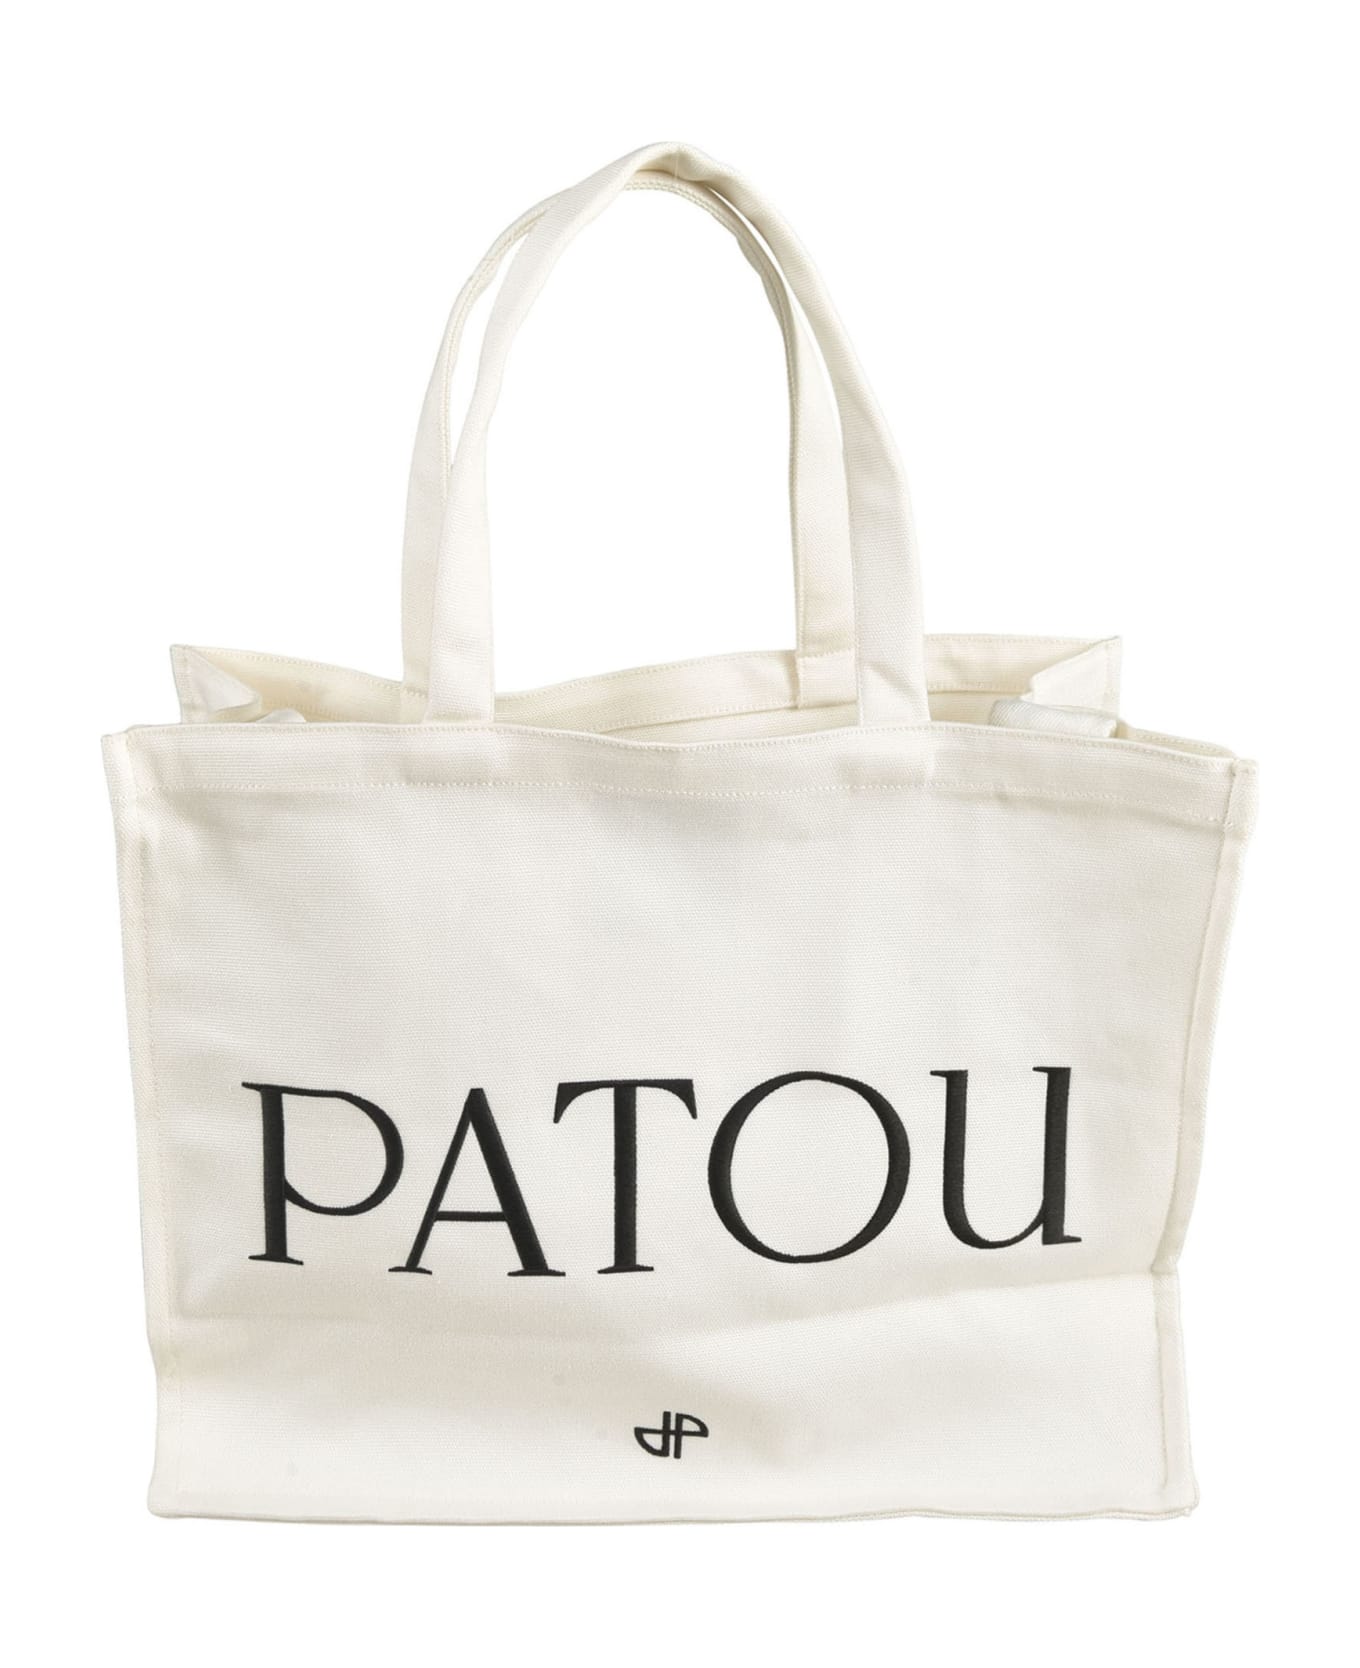 Patou Logo Large Tote - WHITE